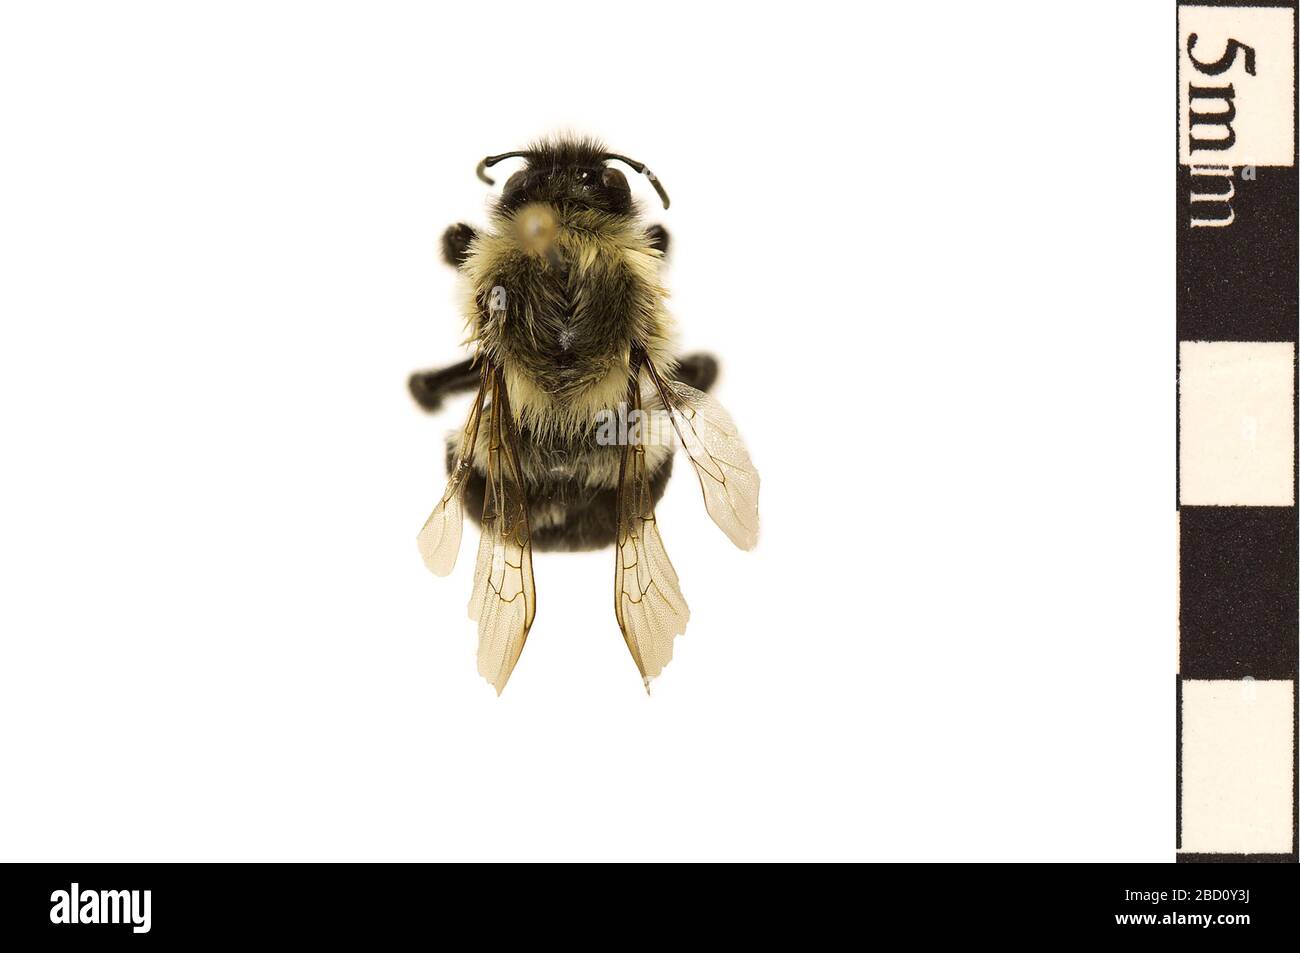 Common Eastern Bumble Bee. EO 400436 Common Eastern Bumble Bee Bombus impatiens 001.jpg Stock Photo